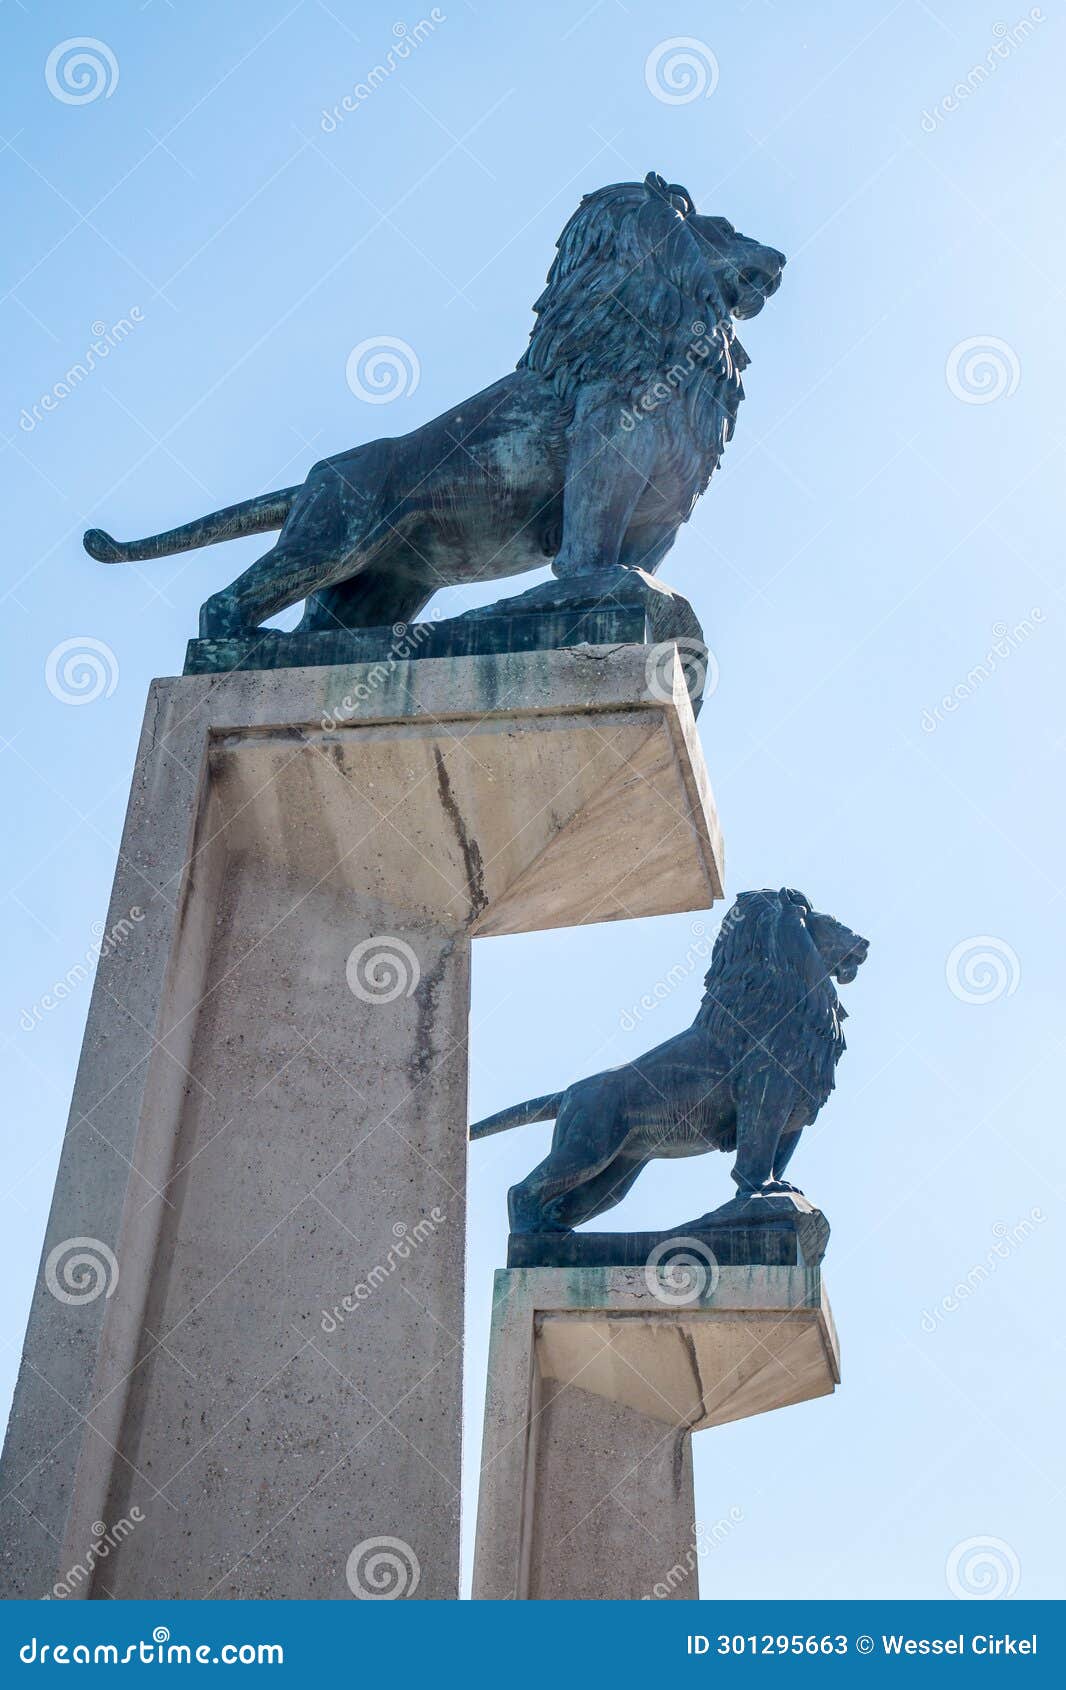 lions of the puente de piedra in zaragoza, spain